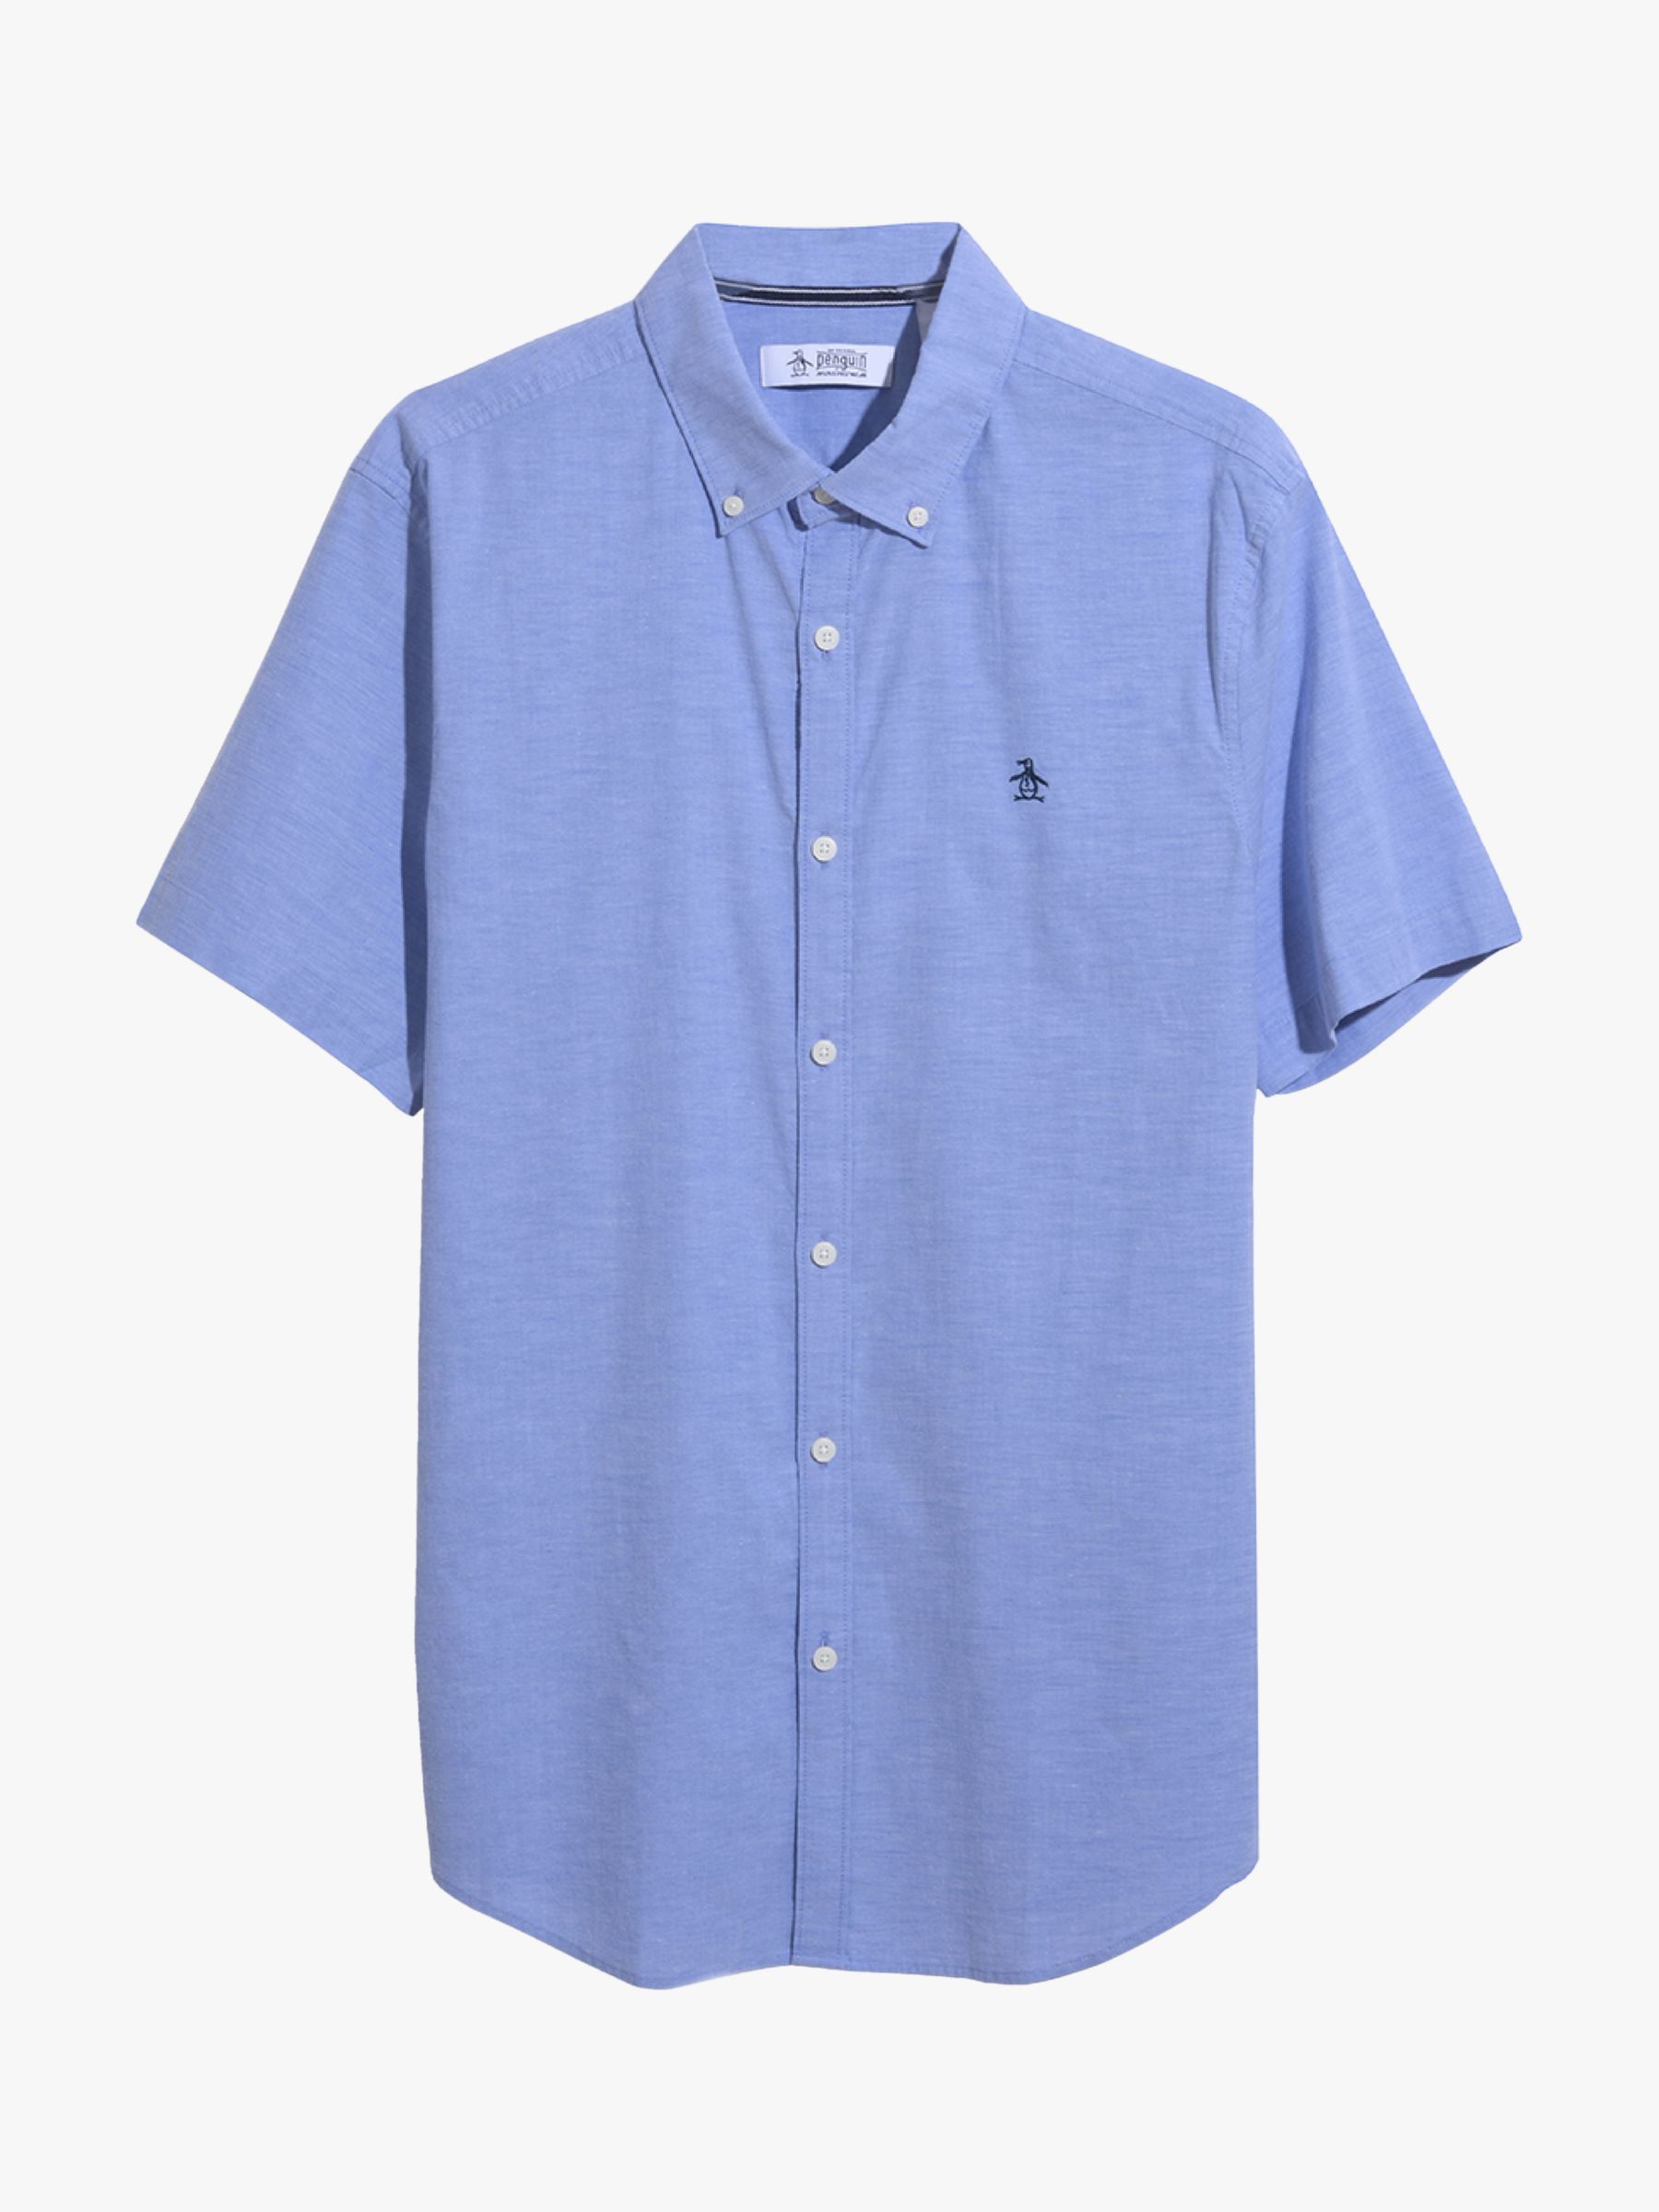 Original Penguin Organic Cotton Blend Short Sleeve Stretch Oxford Shirt, Amparo Blue, L